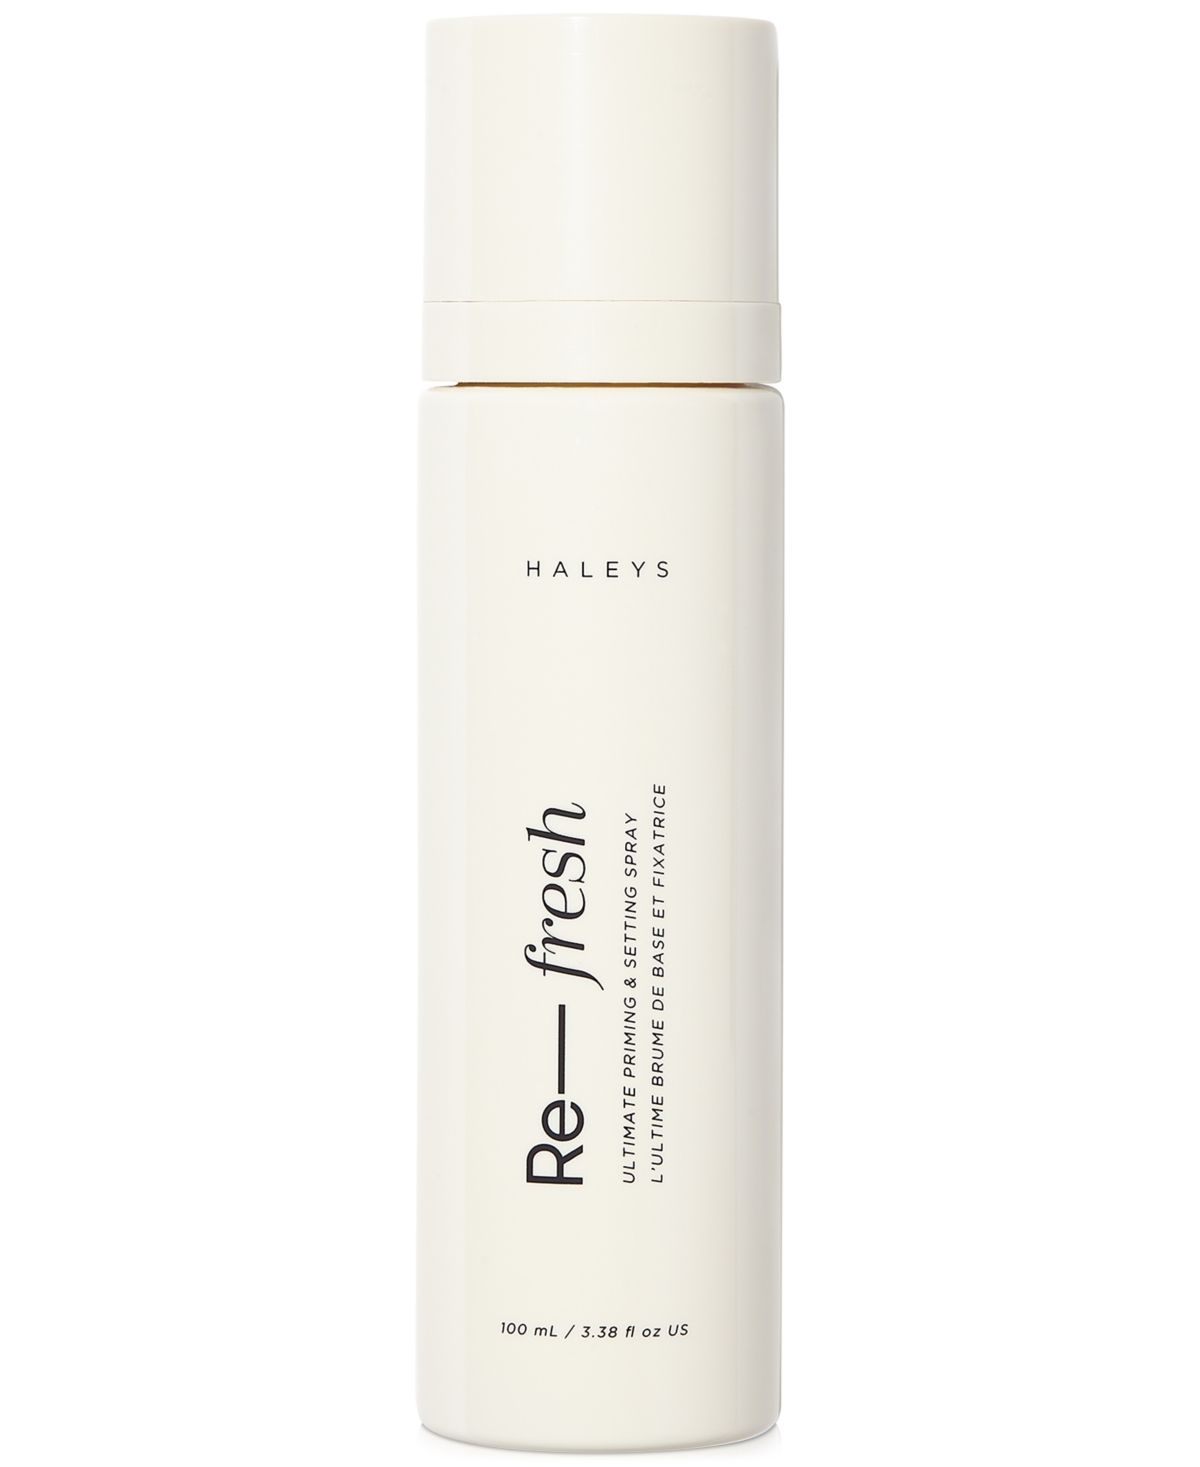 Haleys Beauty Re-fresh Ultimate Priming & Setting Spray, 3.38 oz.